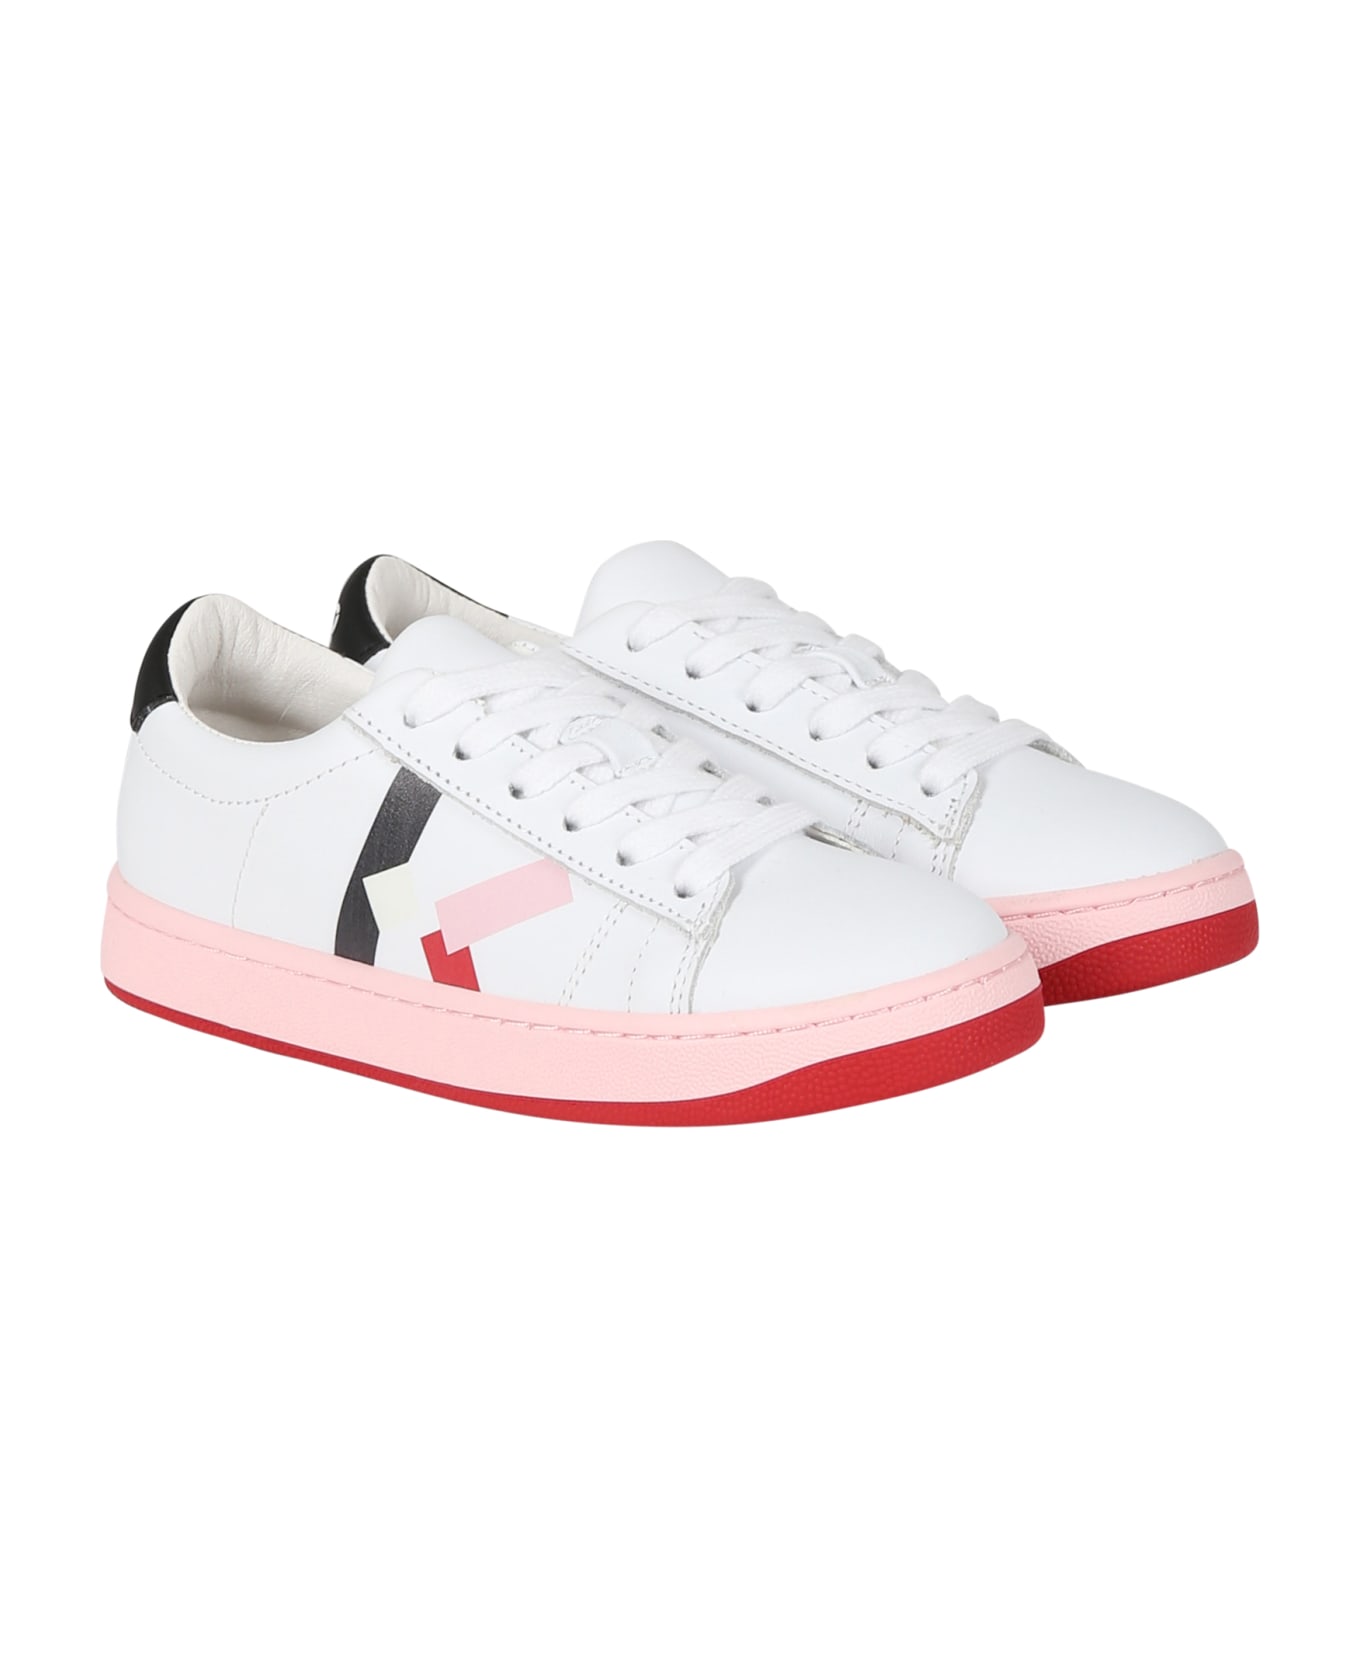 Kenzo Kids White Sneakers For Girl With Logo - White